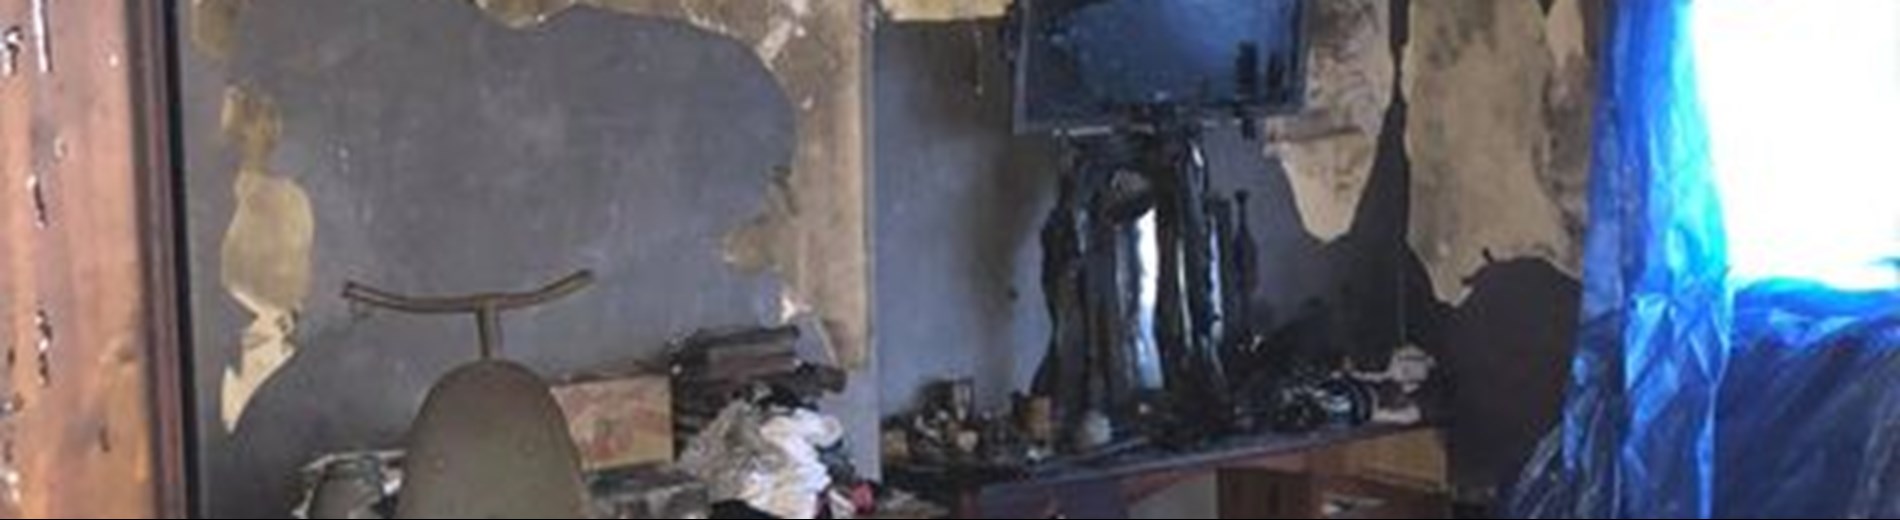 Bedroom mirror sparks house blaze